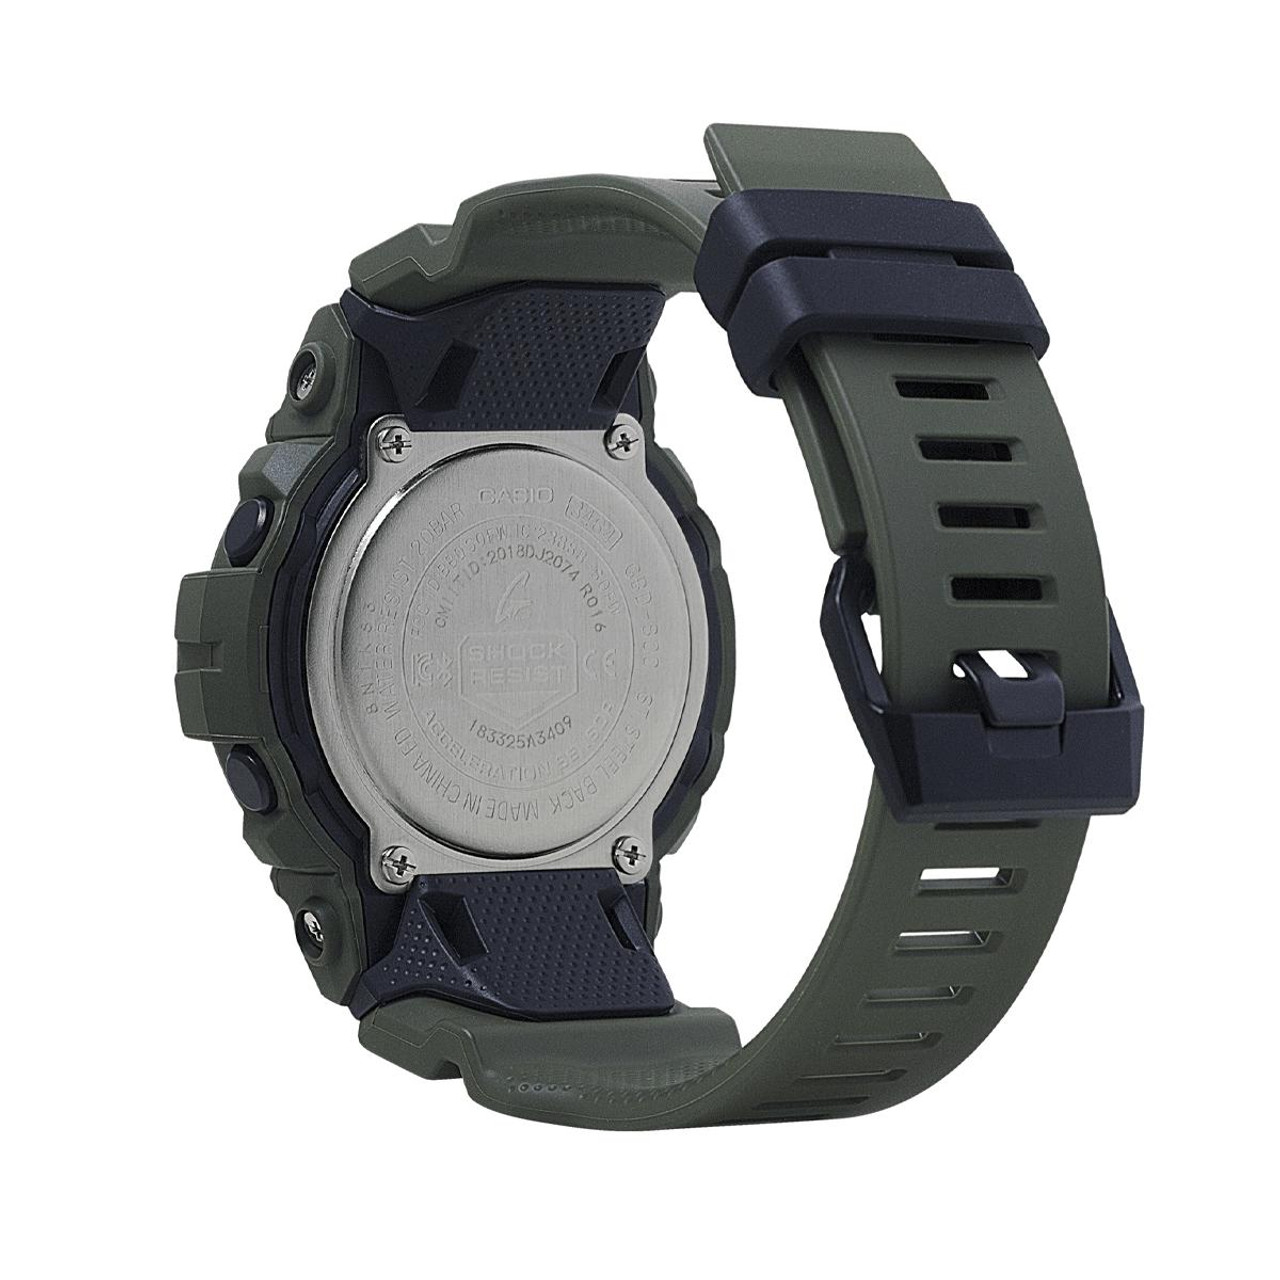  Casio ANI-DIGI Power Trainer G Shock Wrist Watch | OD Green 